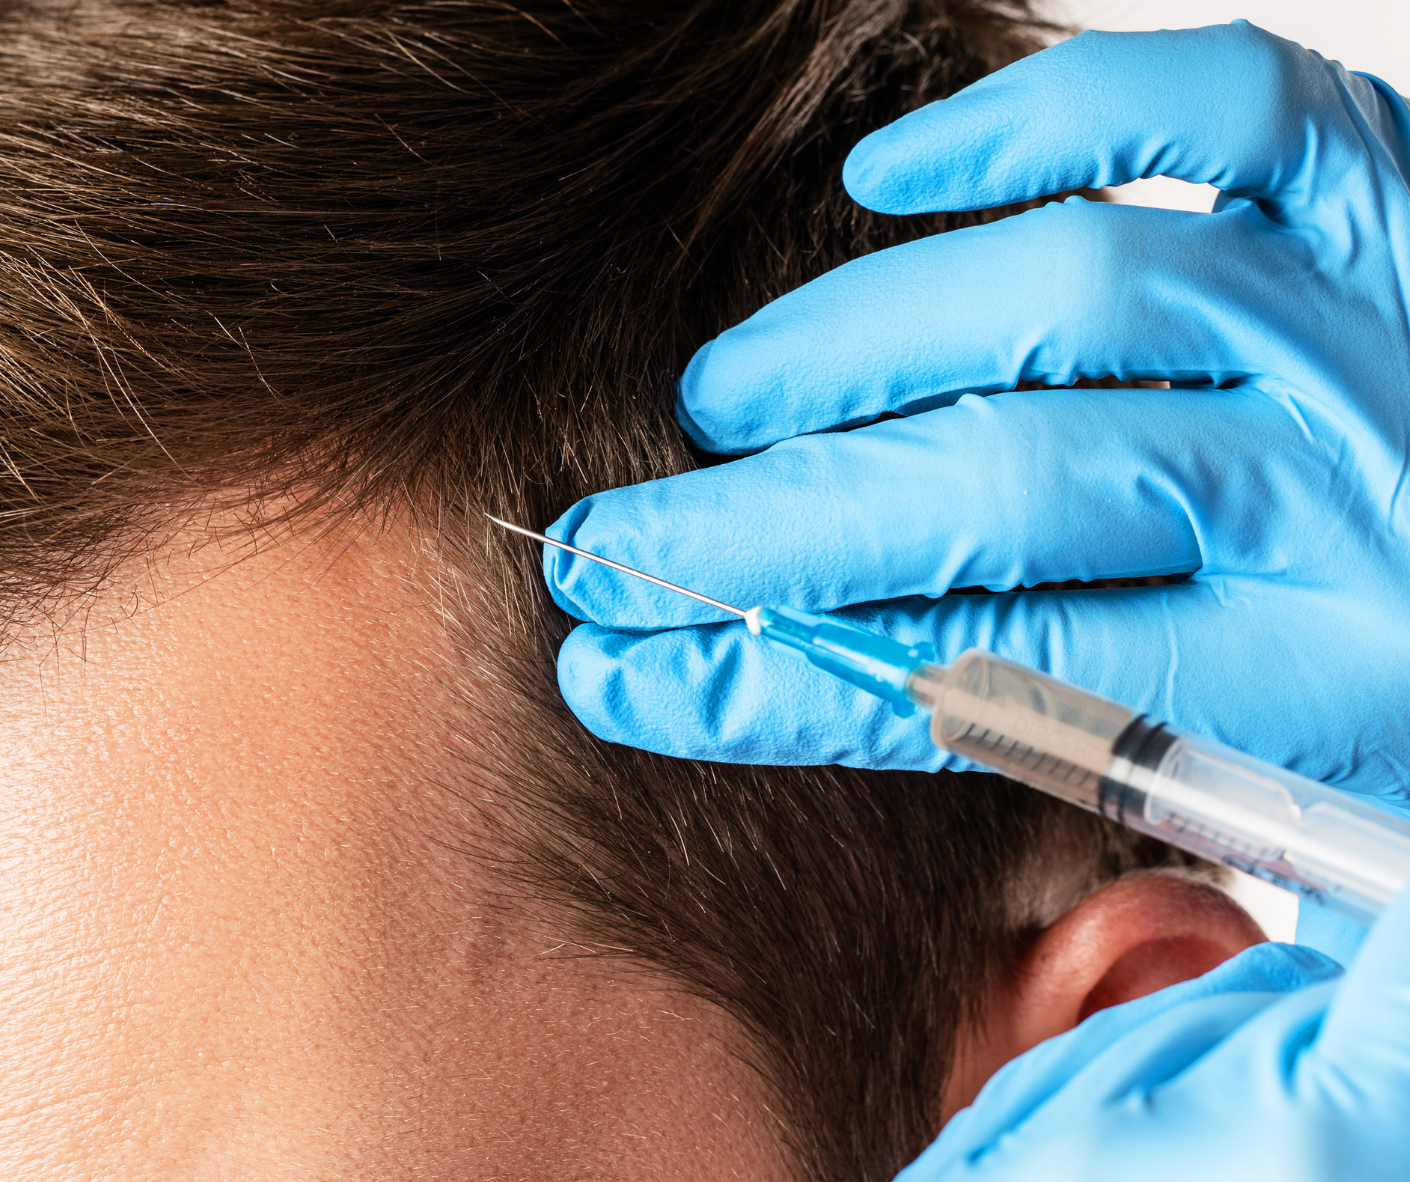 prp for hair restoration in men and women